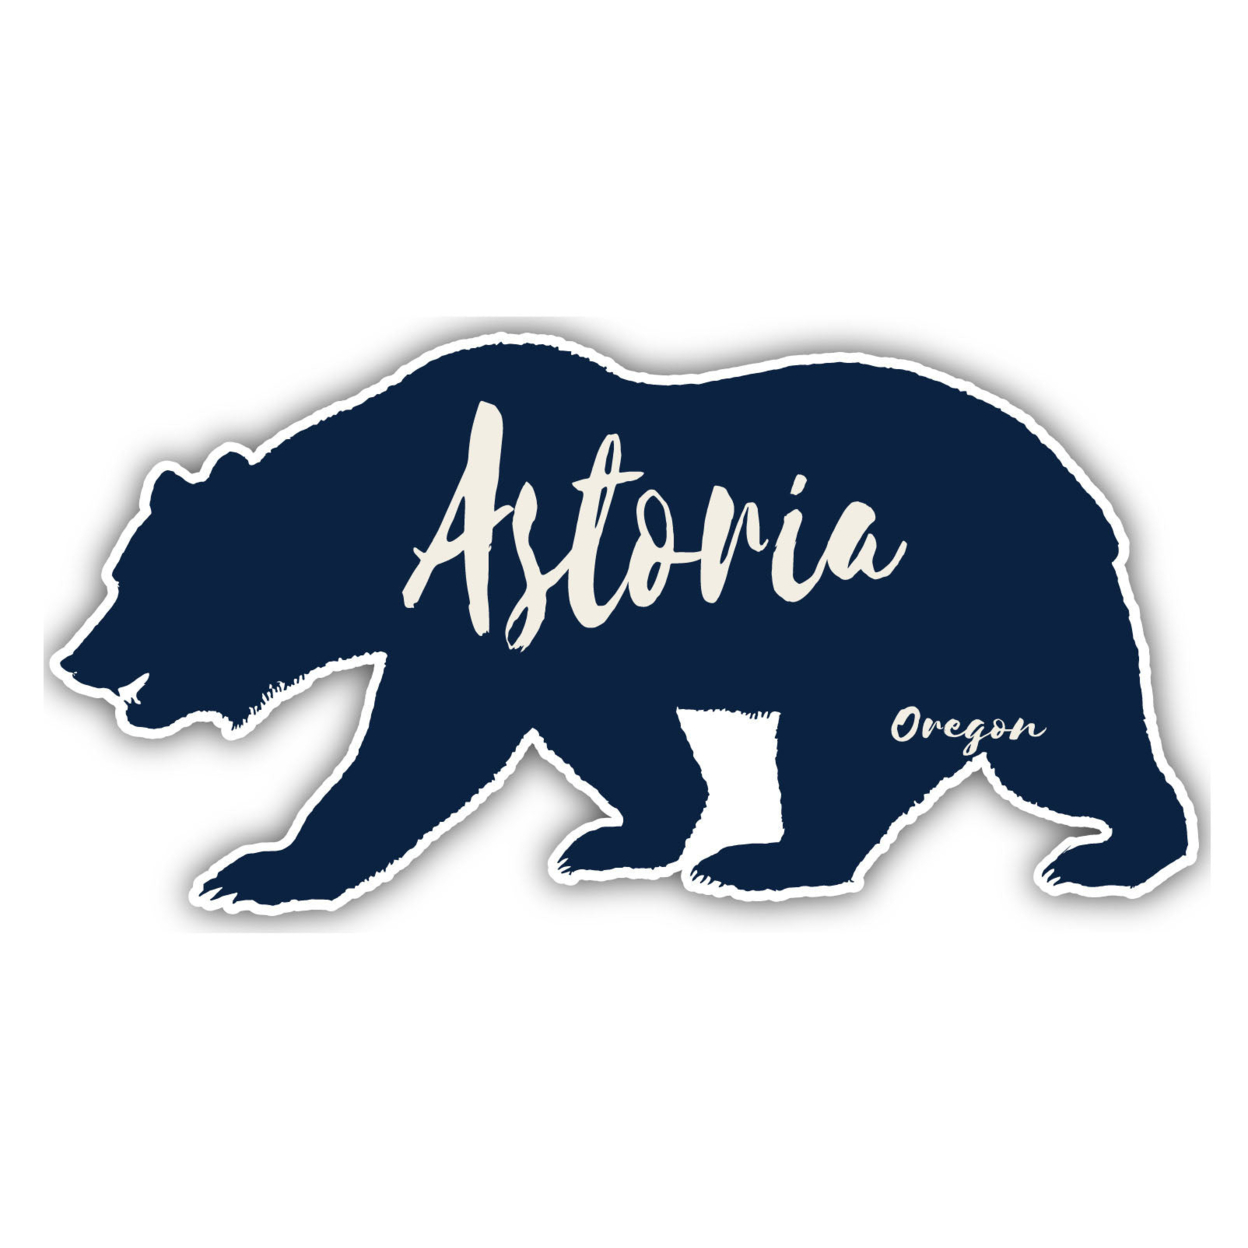 Astoria Oregon Souvenir Decorative Stickers (Choose Theme And Size) - 4-Pack, 10-Inch, Tent